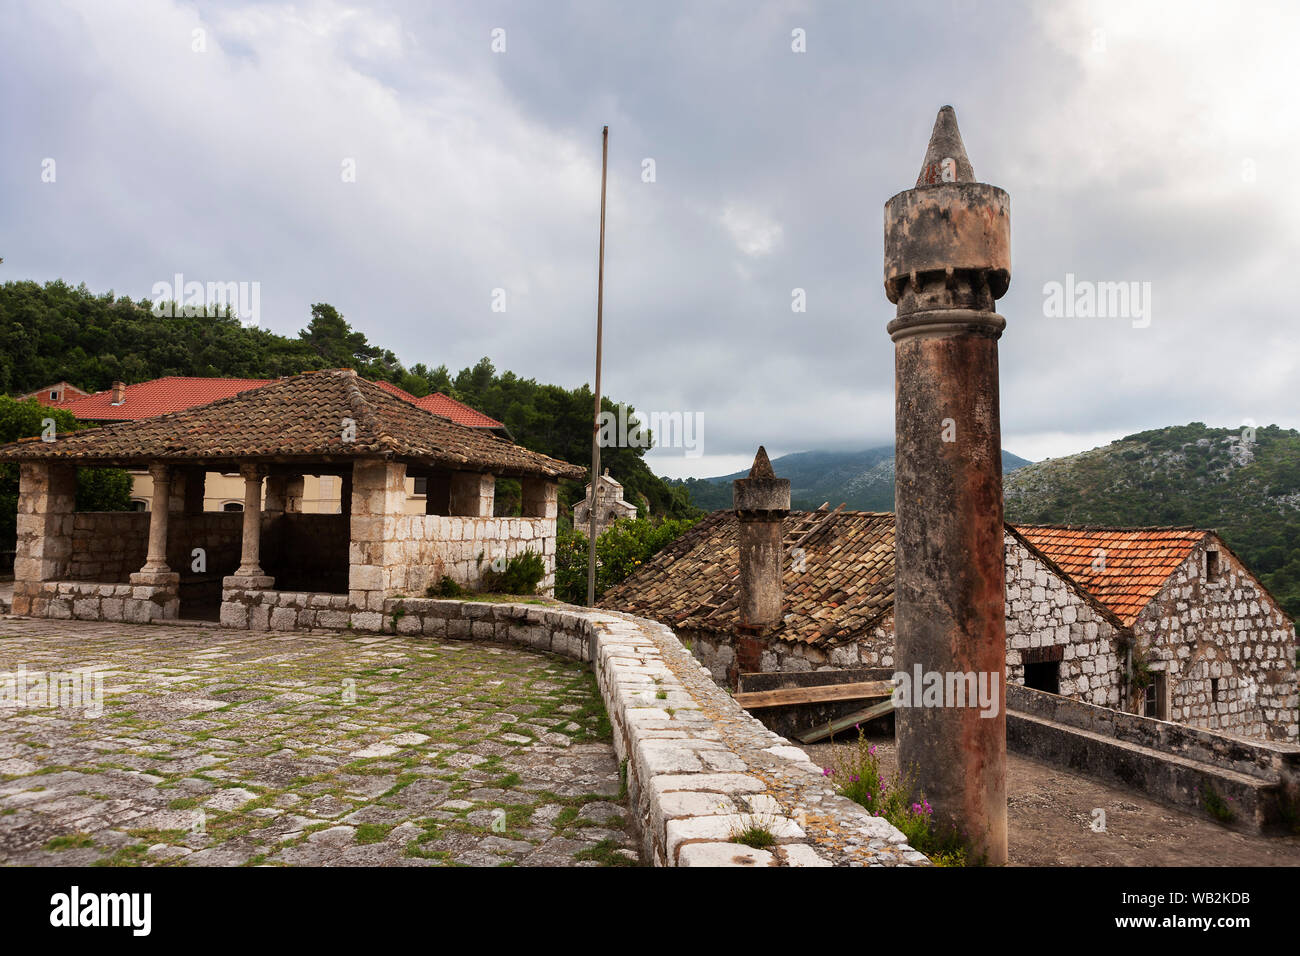 Public meeting place, Ulica Dolac, island of Lastovo, Dubrovnik-Neretva, Croatia Stock Photo